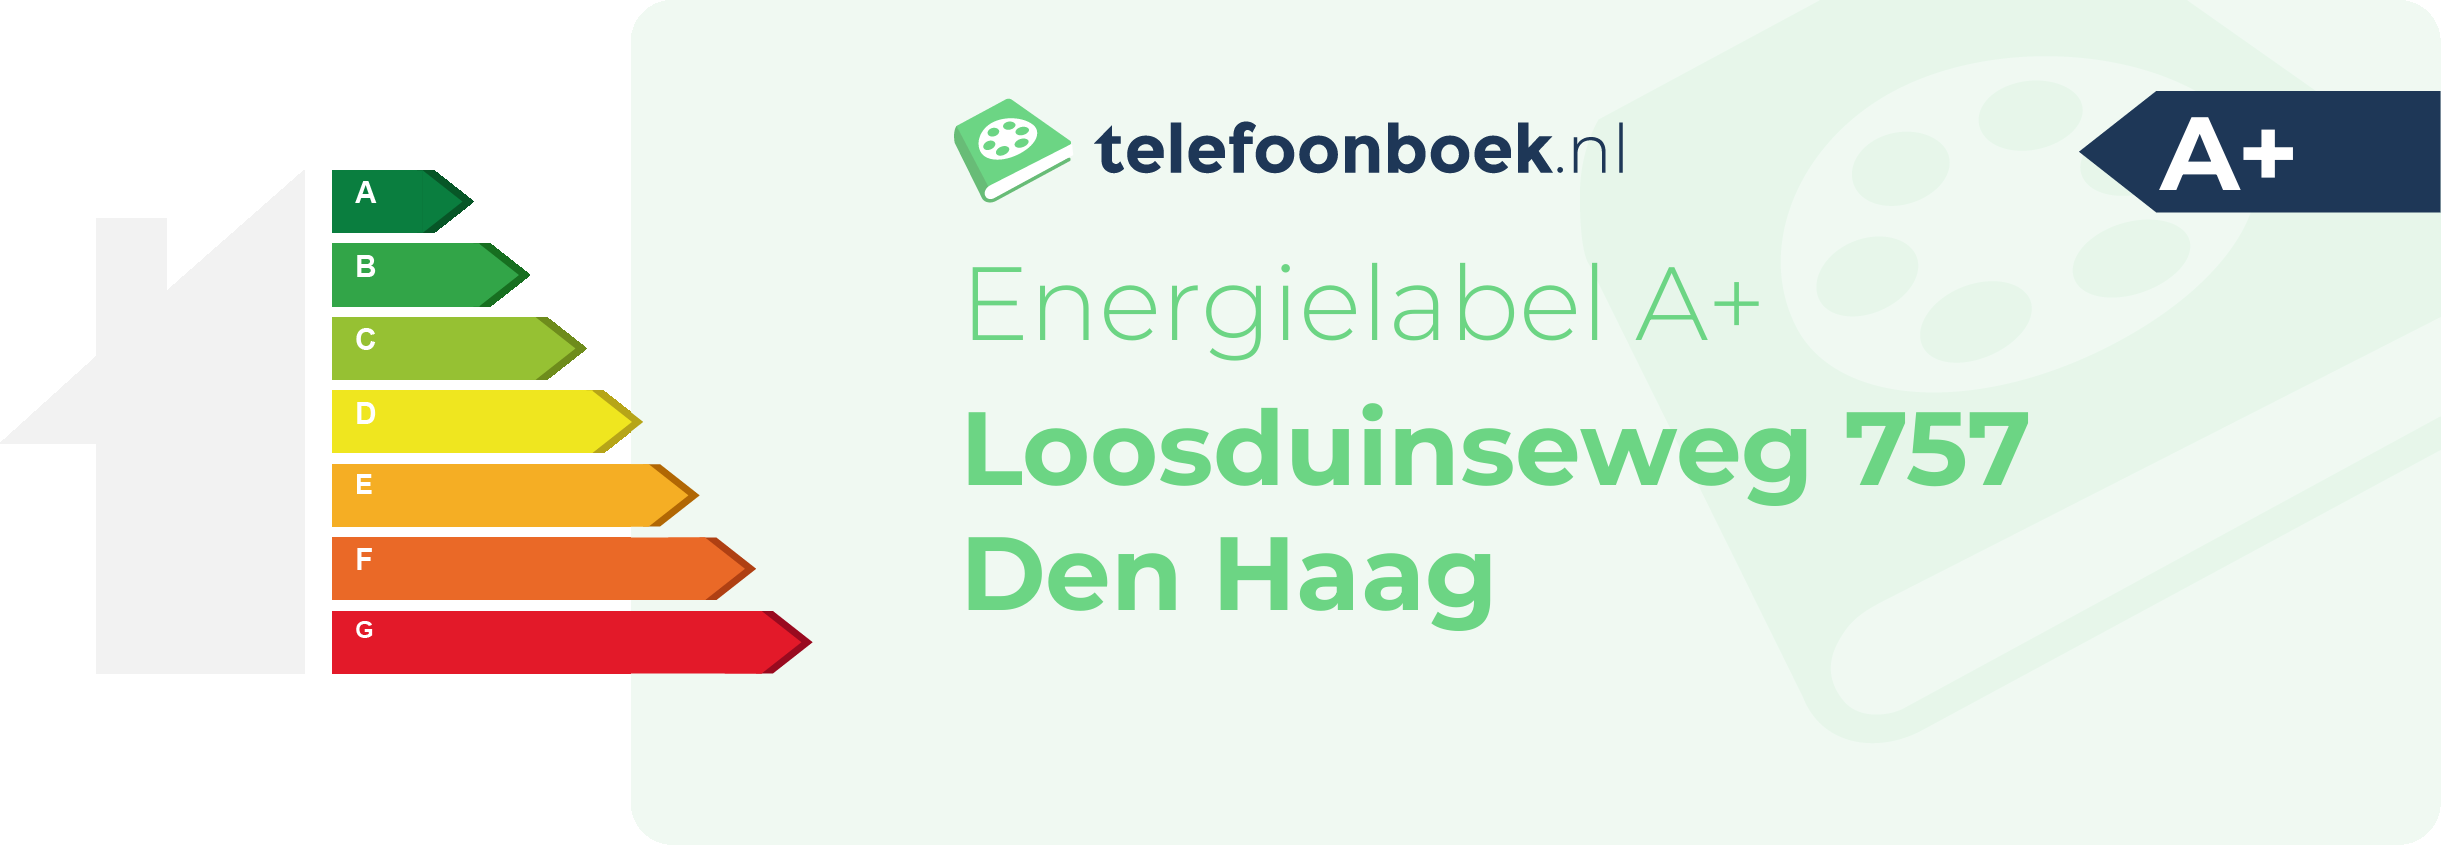 Energielabel Loosduinseweg 757 Den Haag